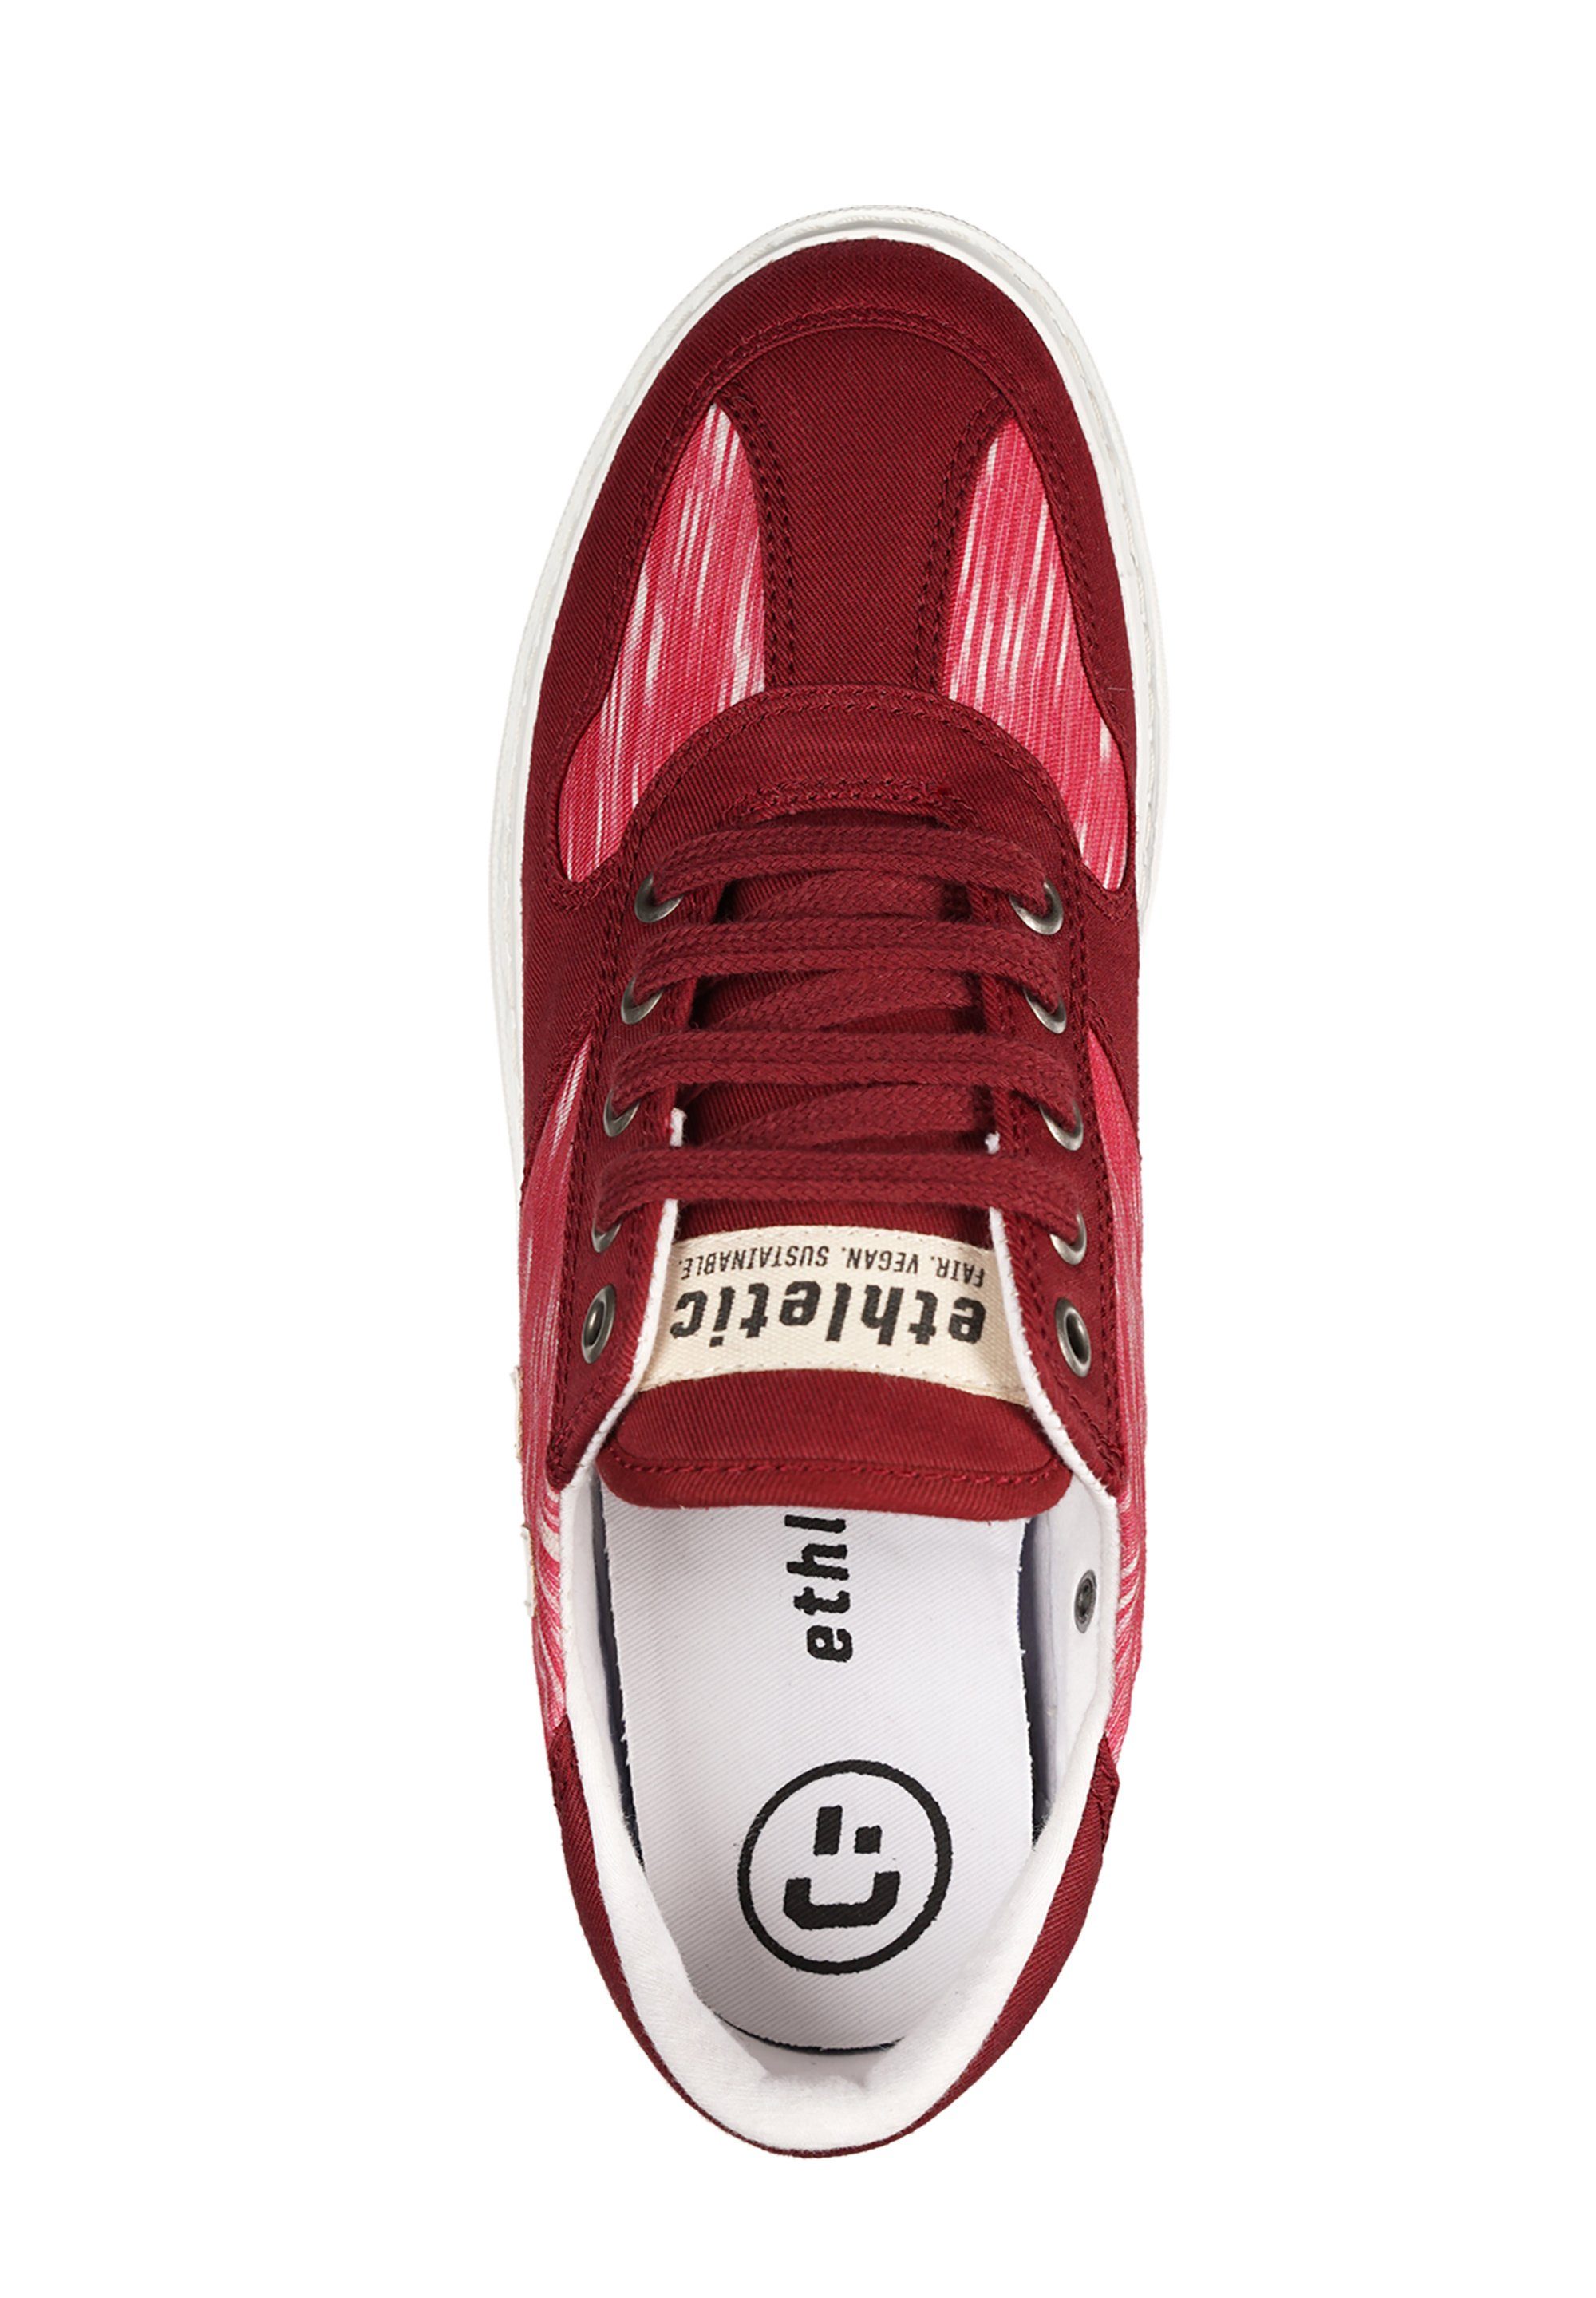 ETHLETIC Root Produkt Fairtrade melange red II Sneaker